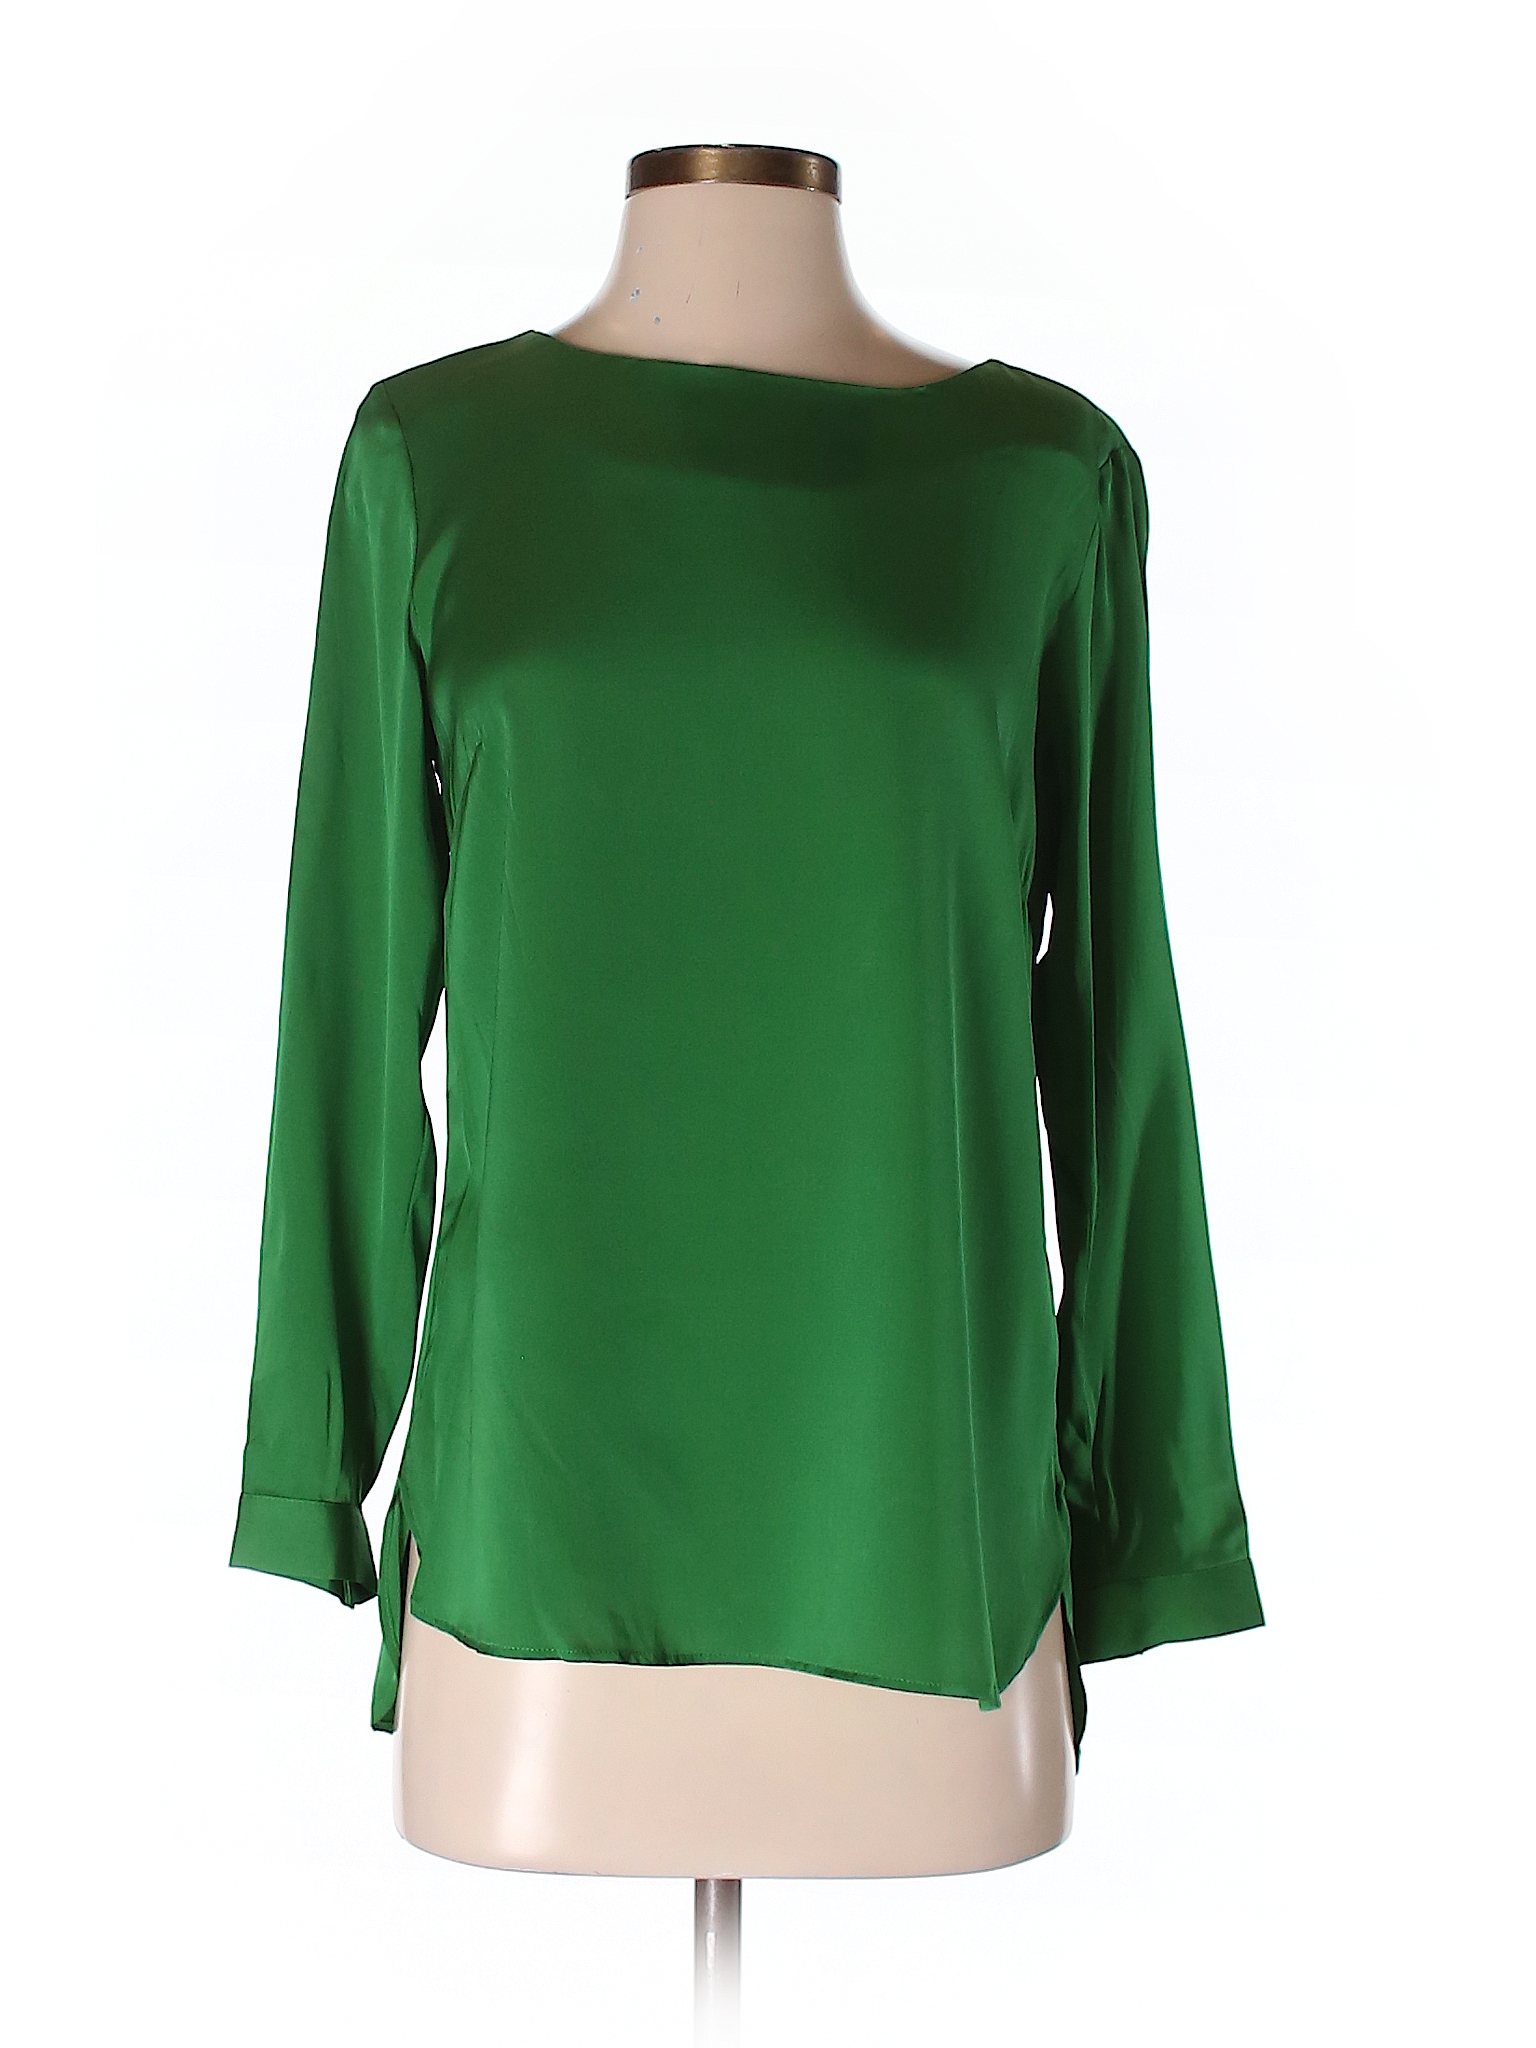 Elizabeth McKay Solid Green Long Sleeve Silk Top Size 2 - 70% off | thredUP